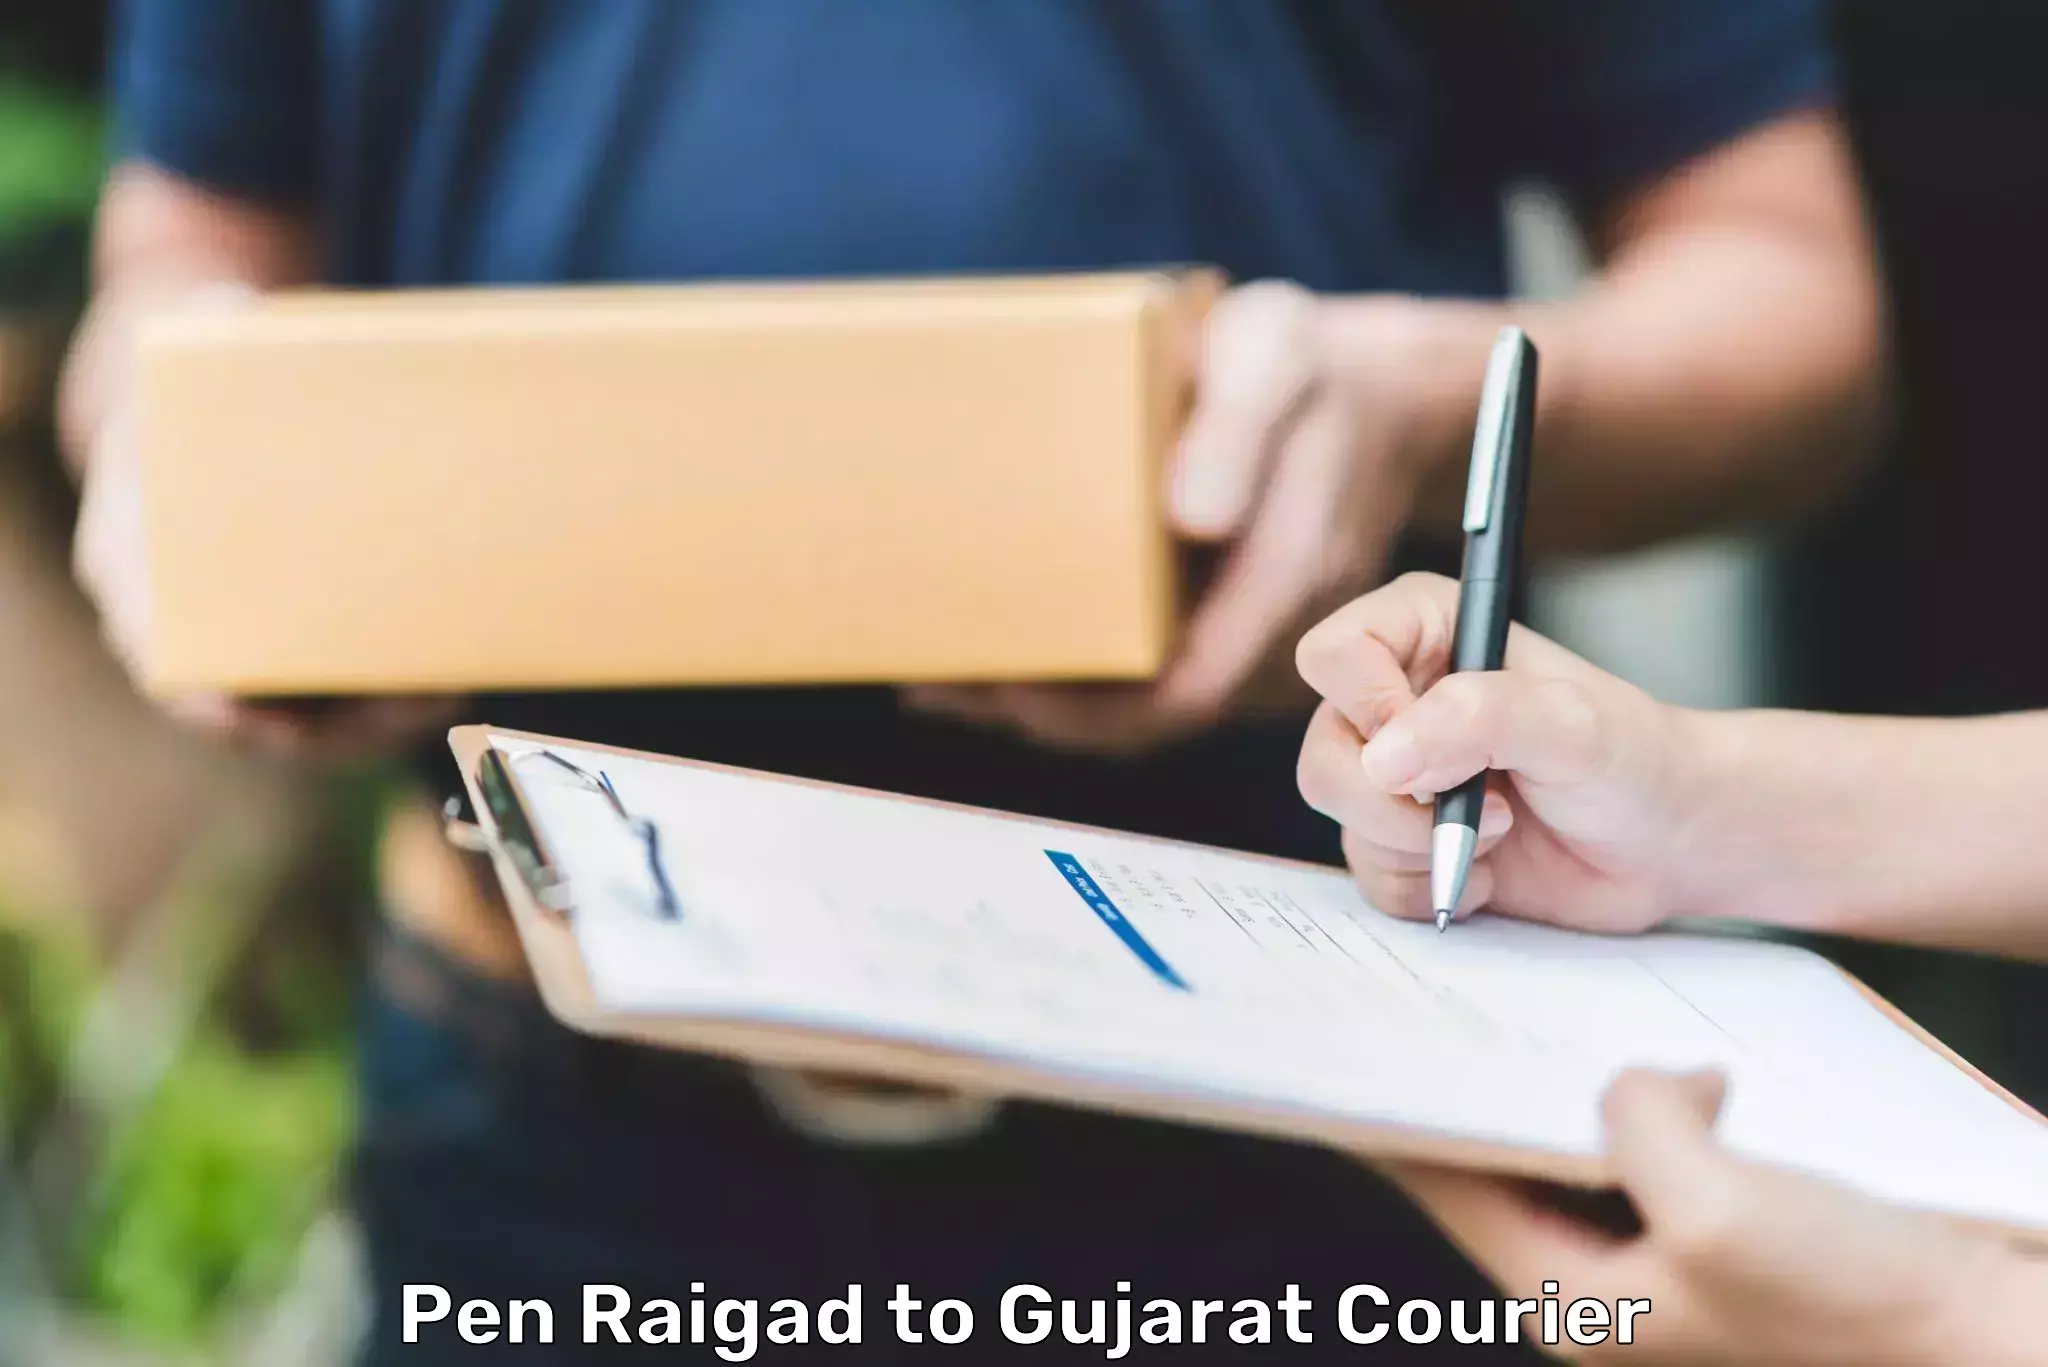 Express postal services Pen Raigad to Gujarat